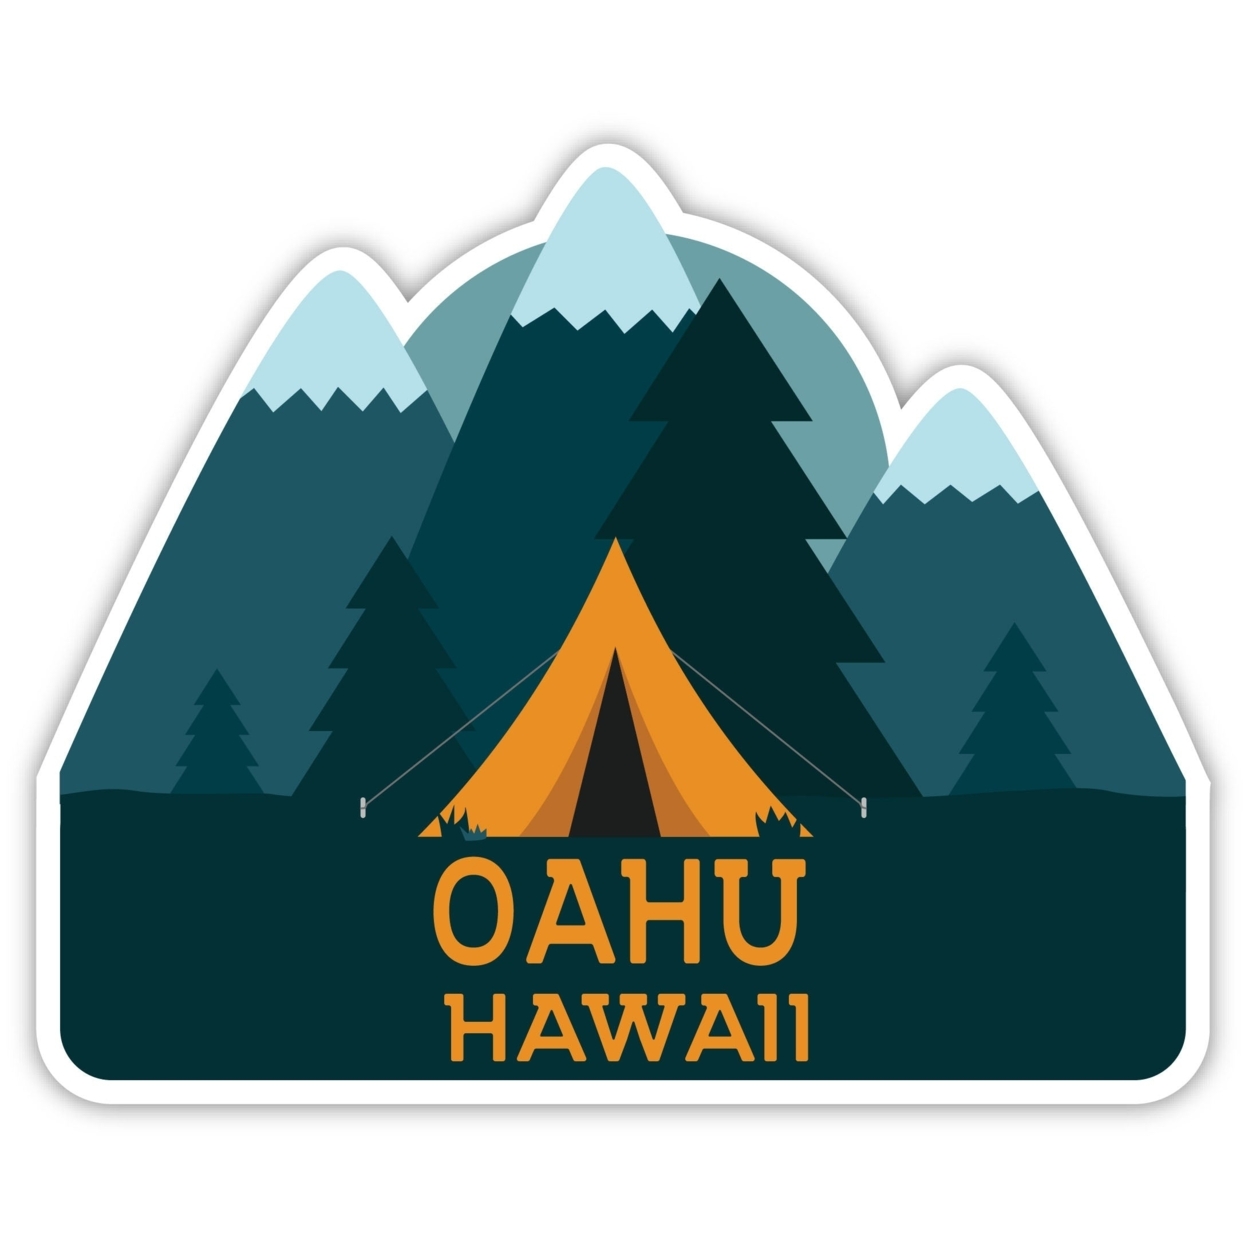 Oahu Hawaii Souvenir Decorative Stickers (Choose Theme And Size) - Single Unit, 4-Inch, Tent